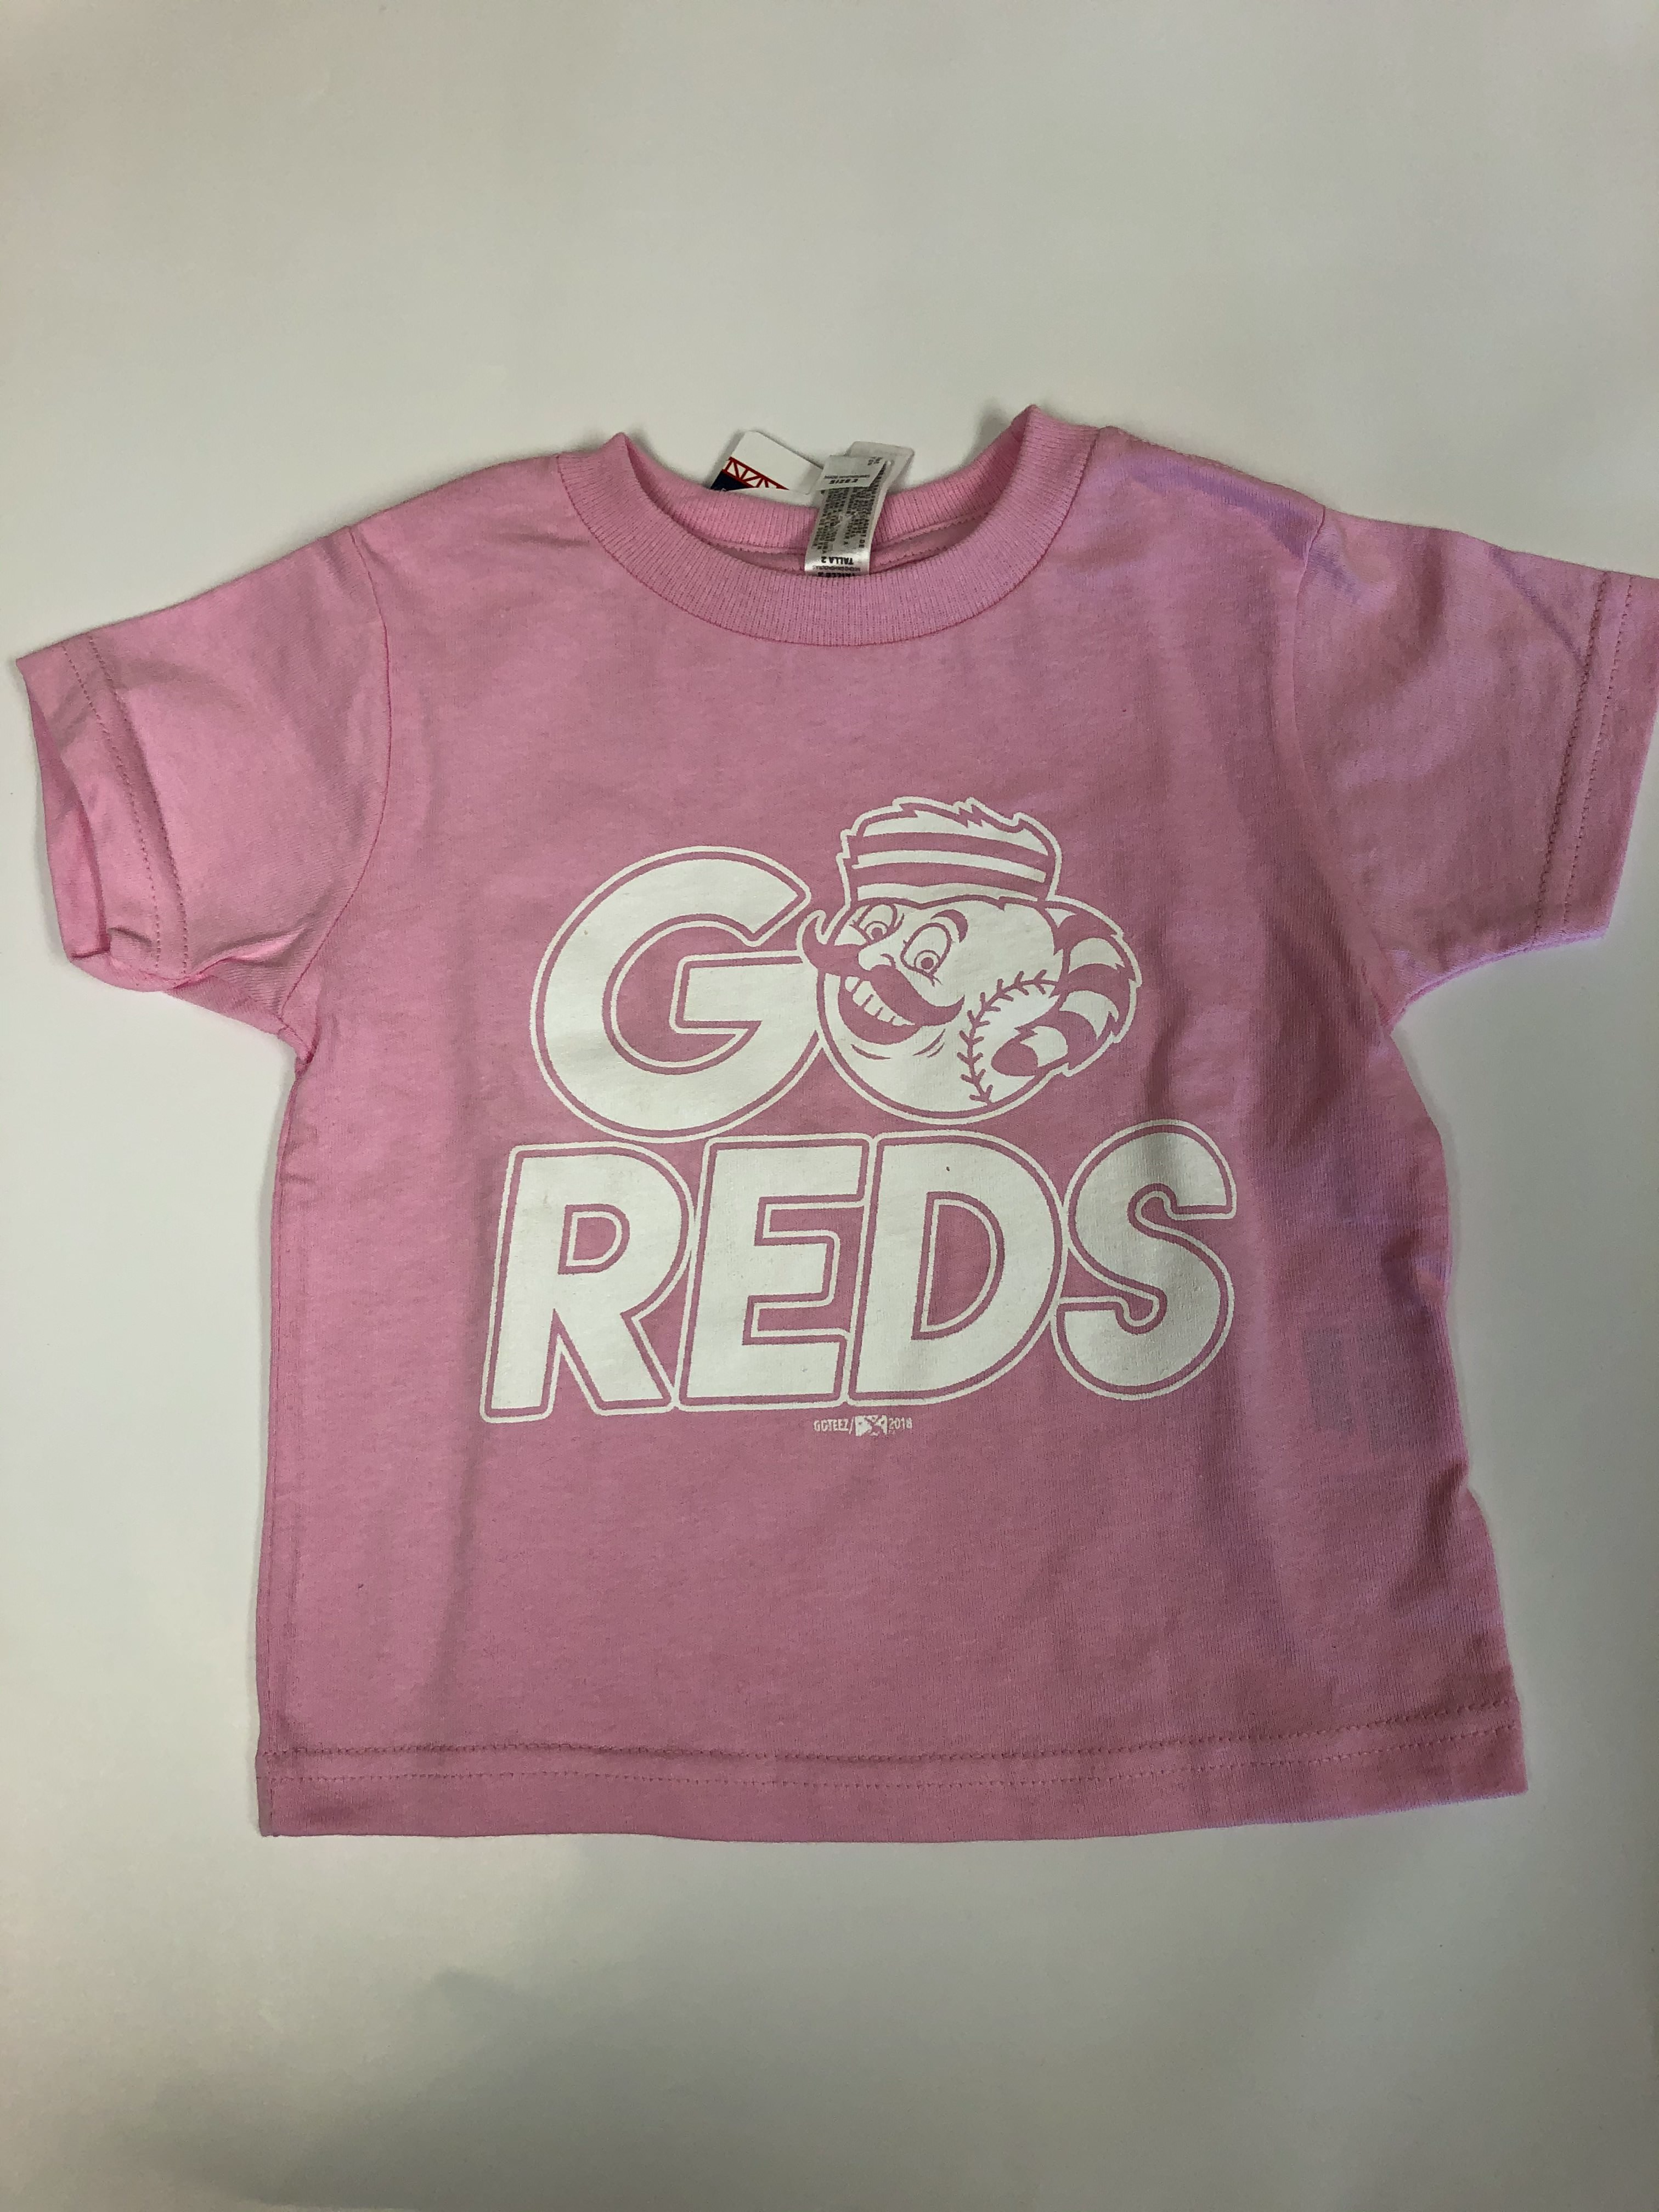 Go Reds Baby Tee Pink-0